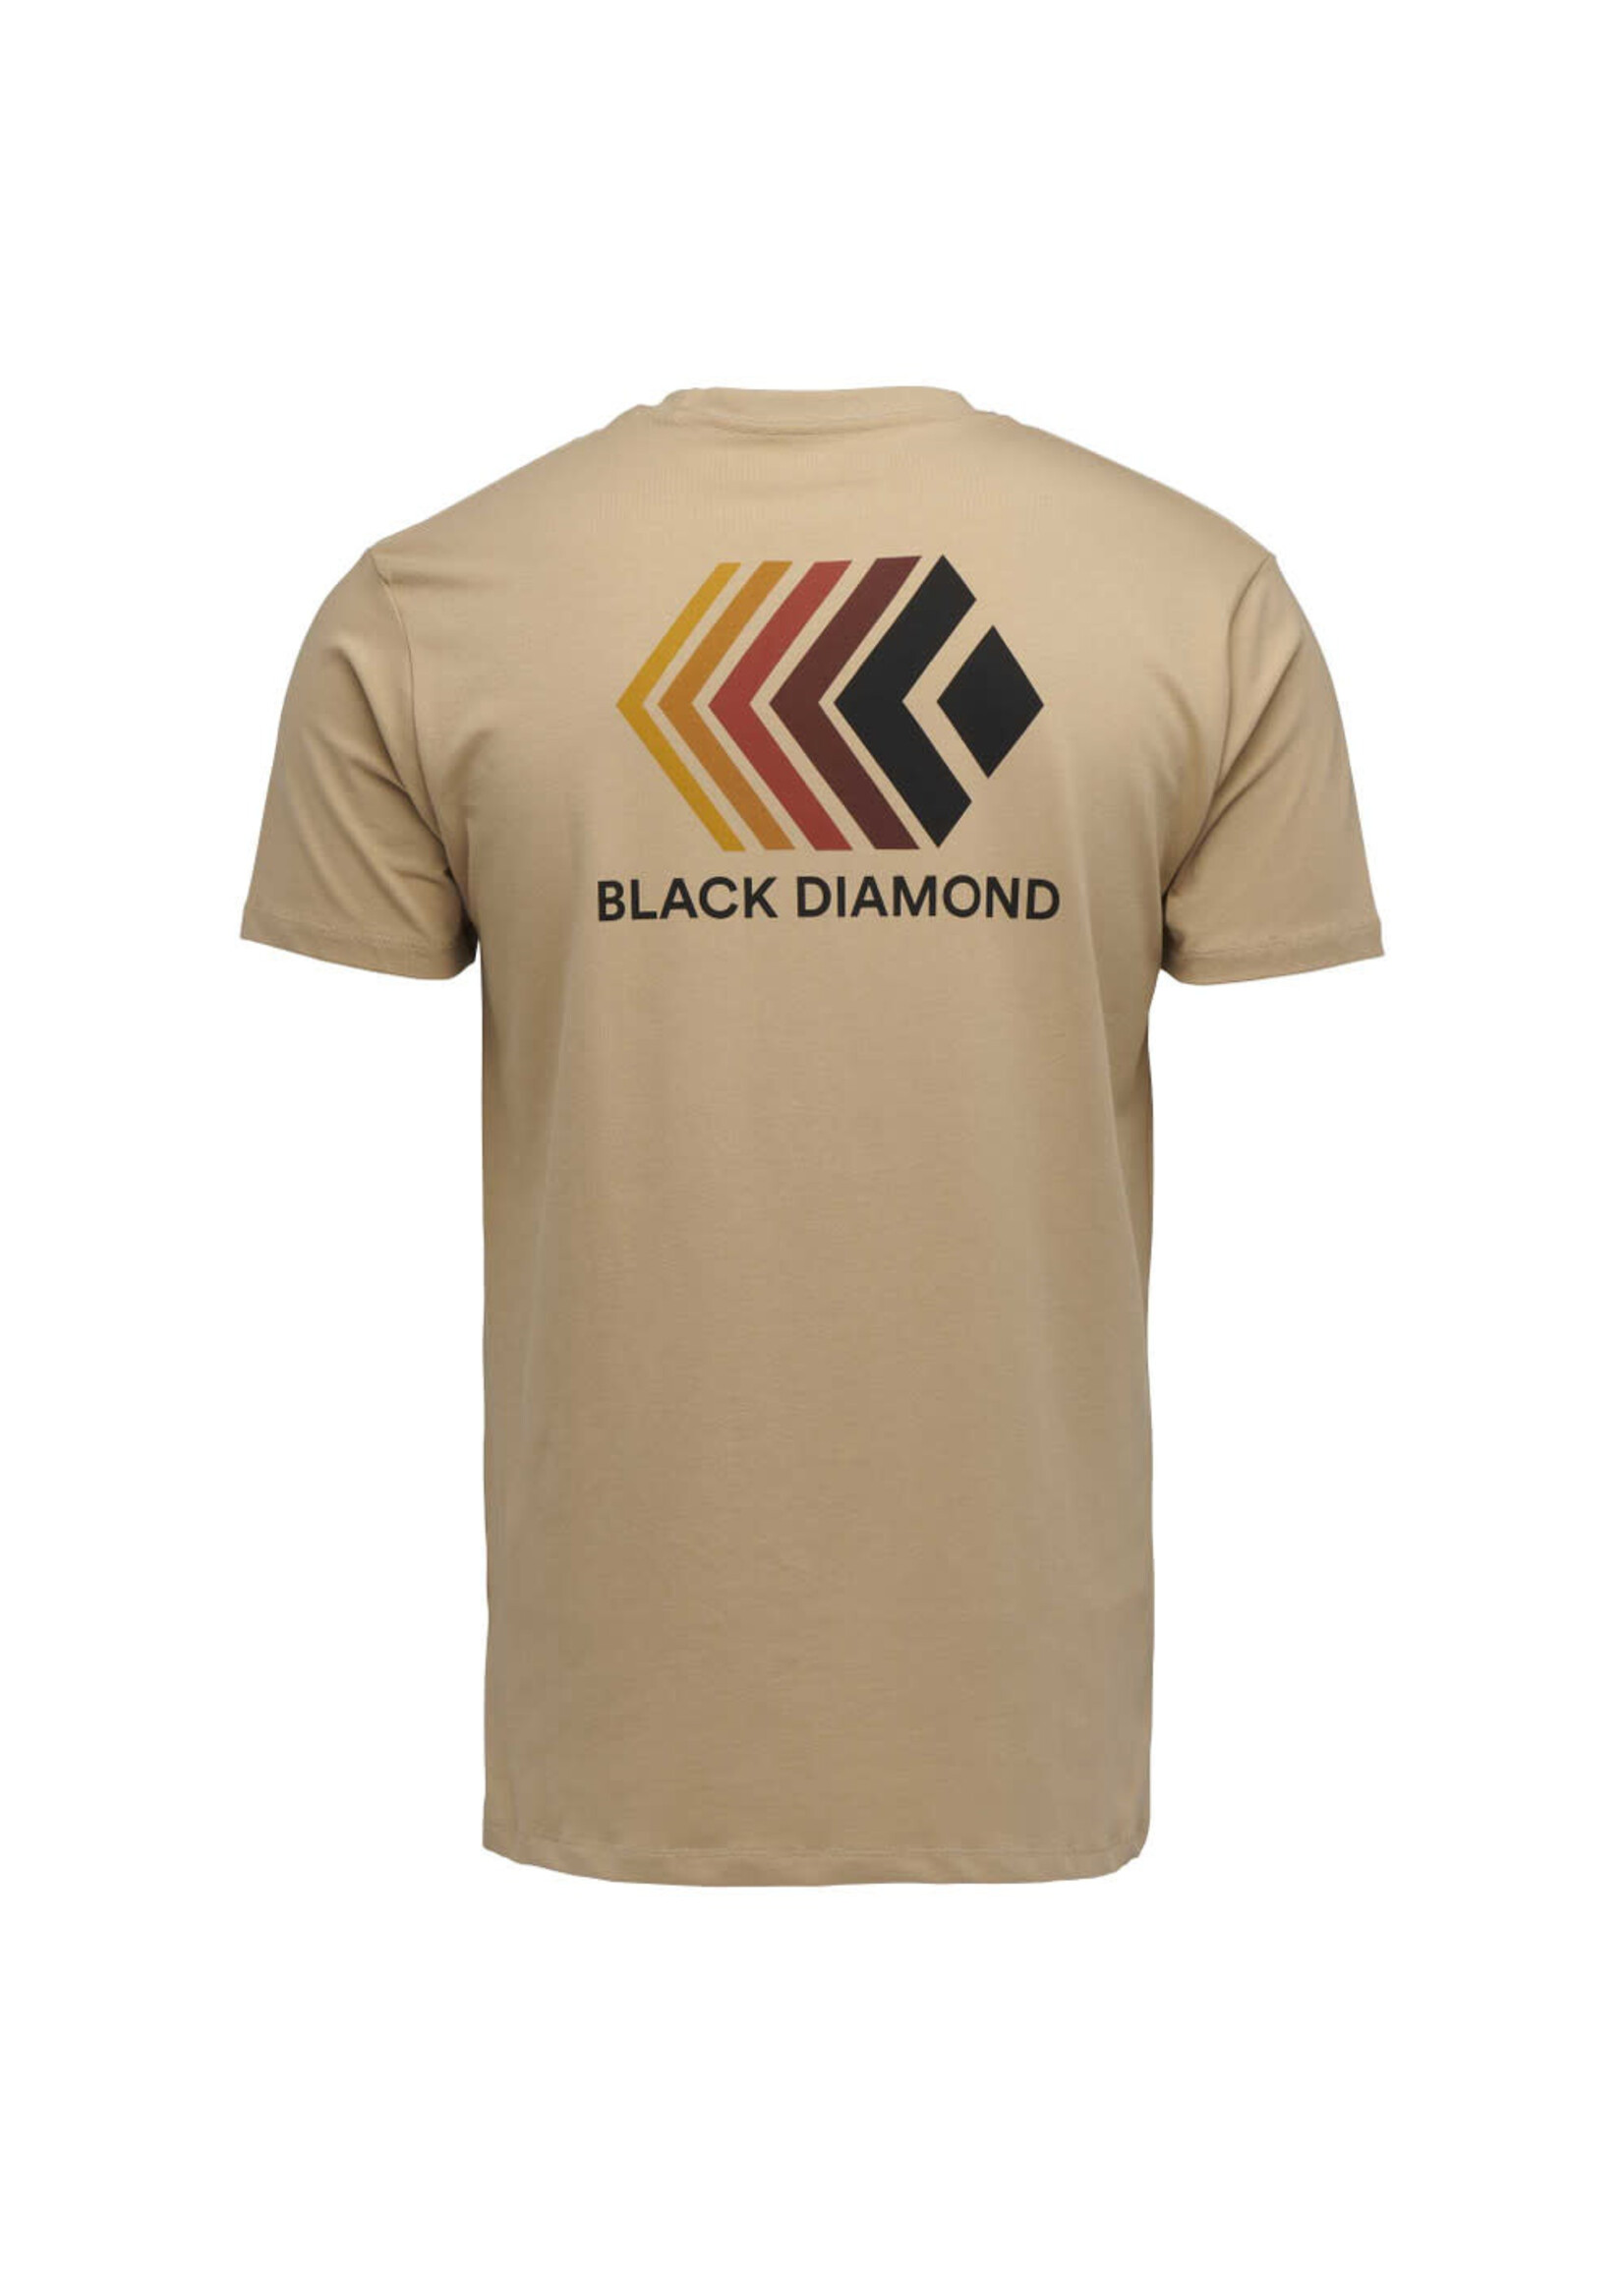 Black Diamond T-shirt Black Diamond Faded Tee